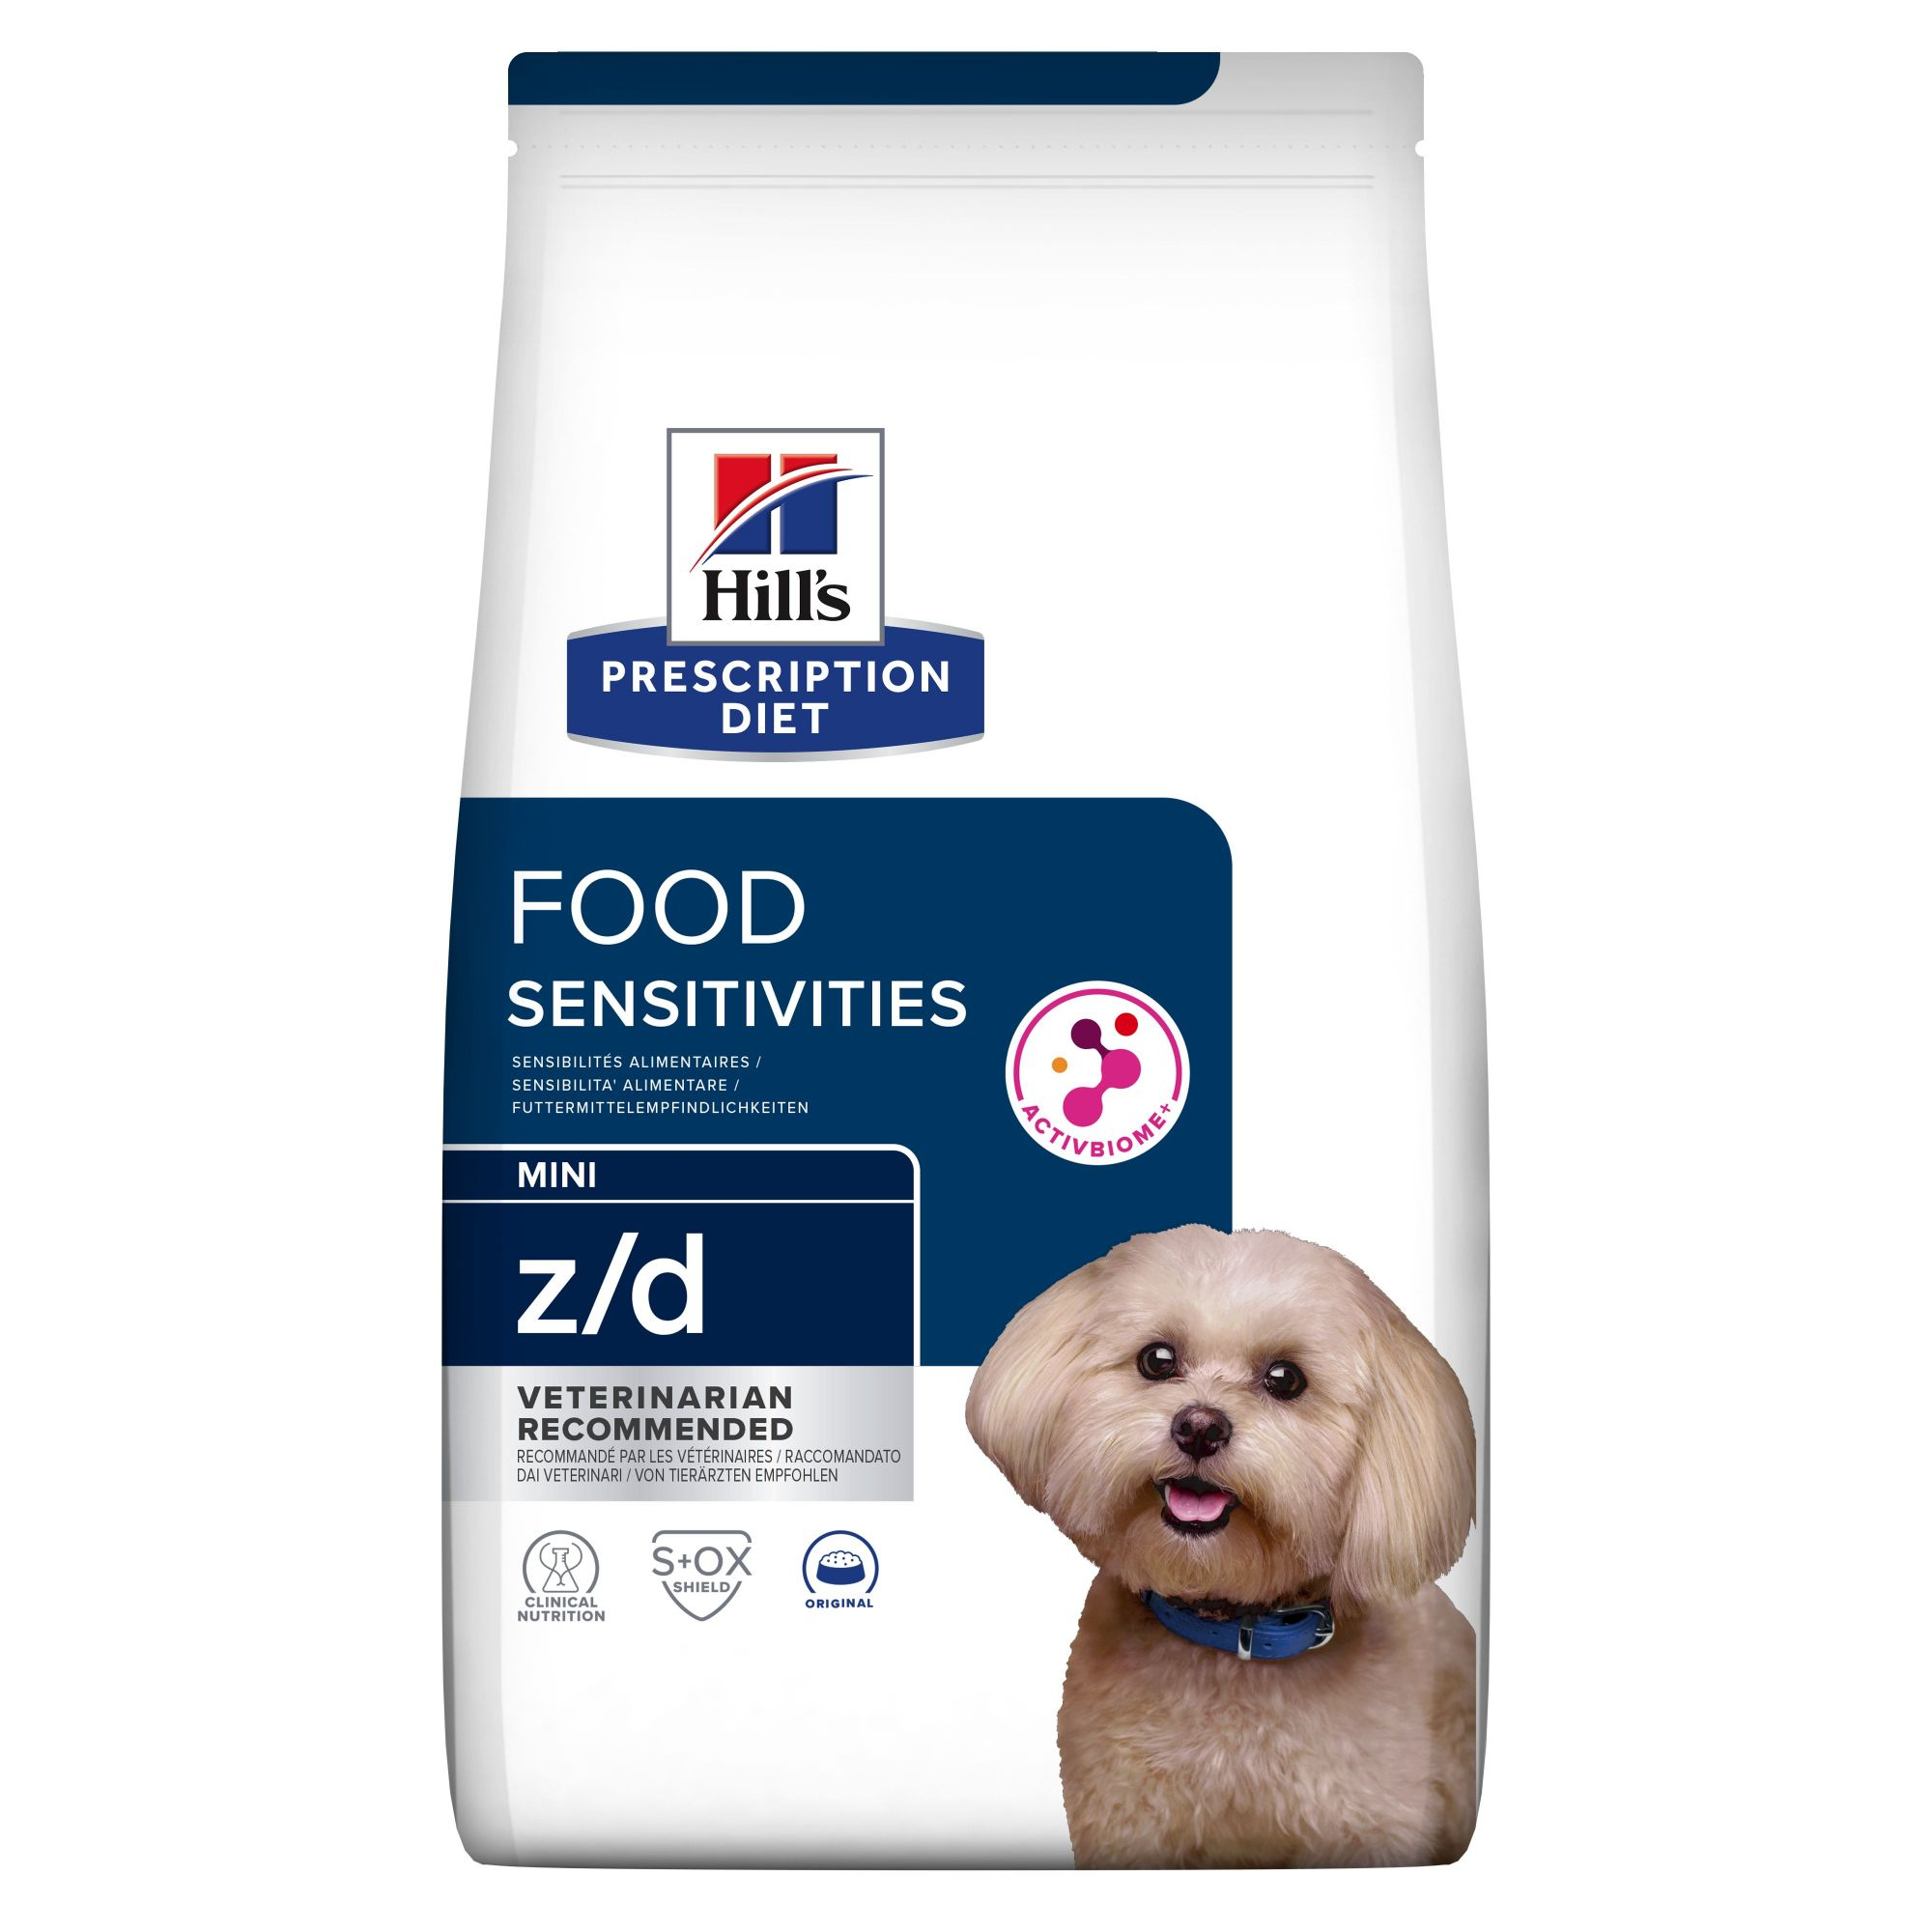 Hill's Prescription Diet z/d Food Sensitivities Mini Pienso para perros mini